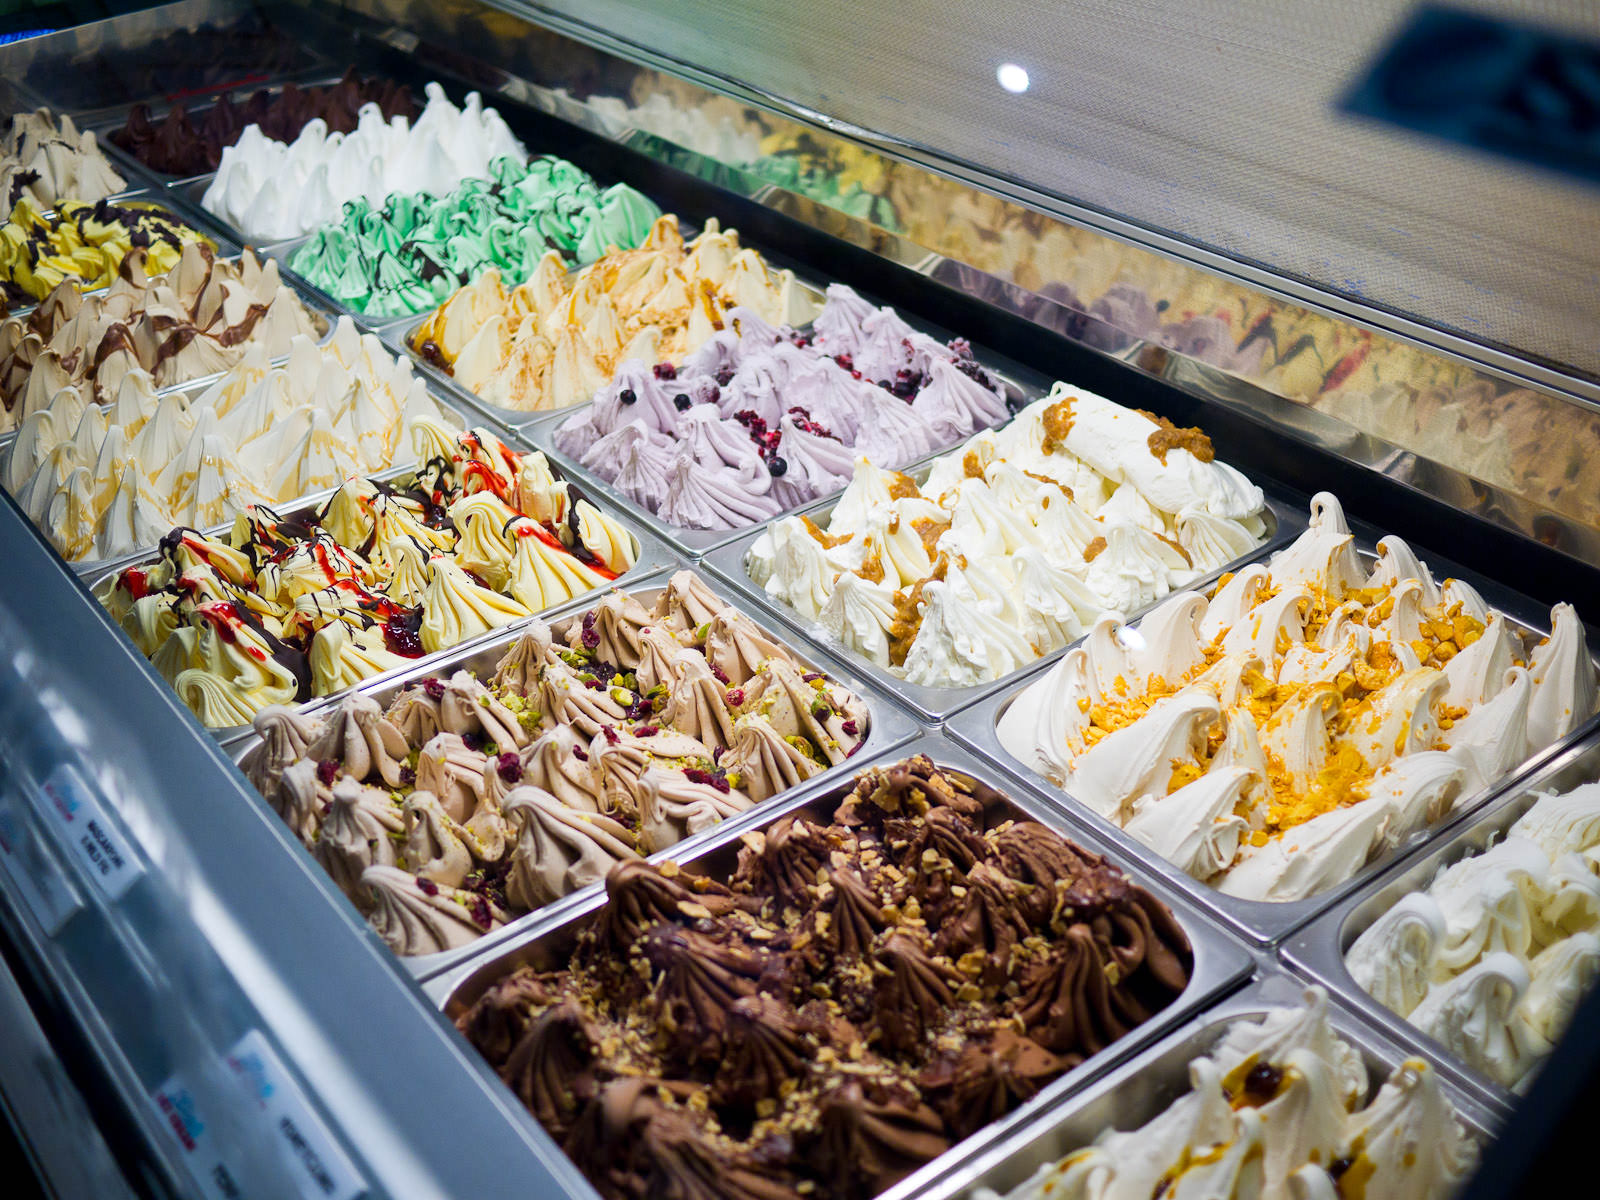 Ice cream on display